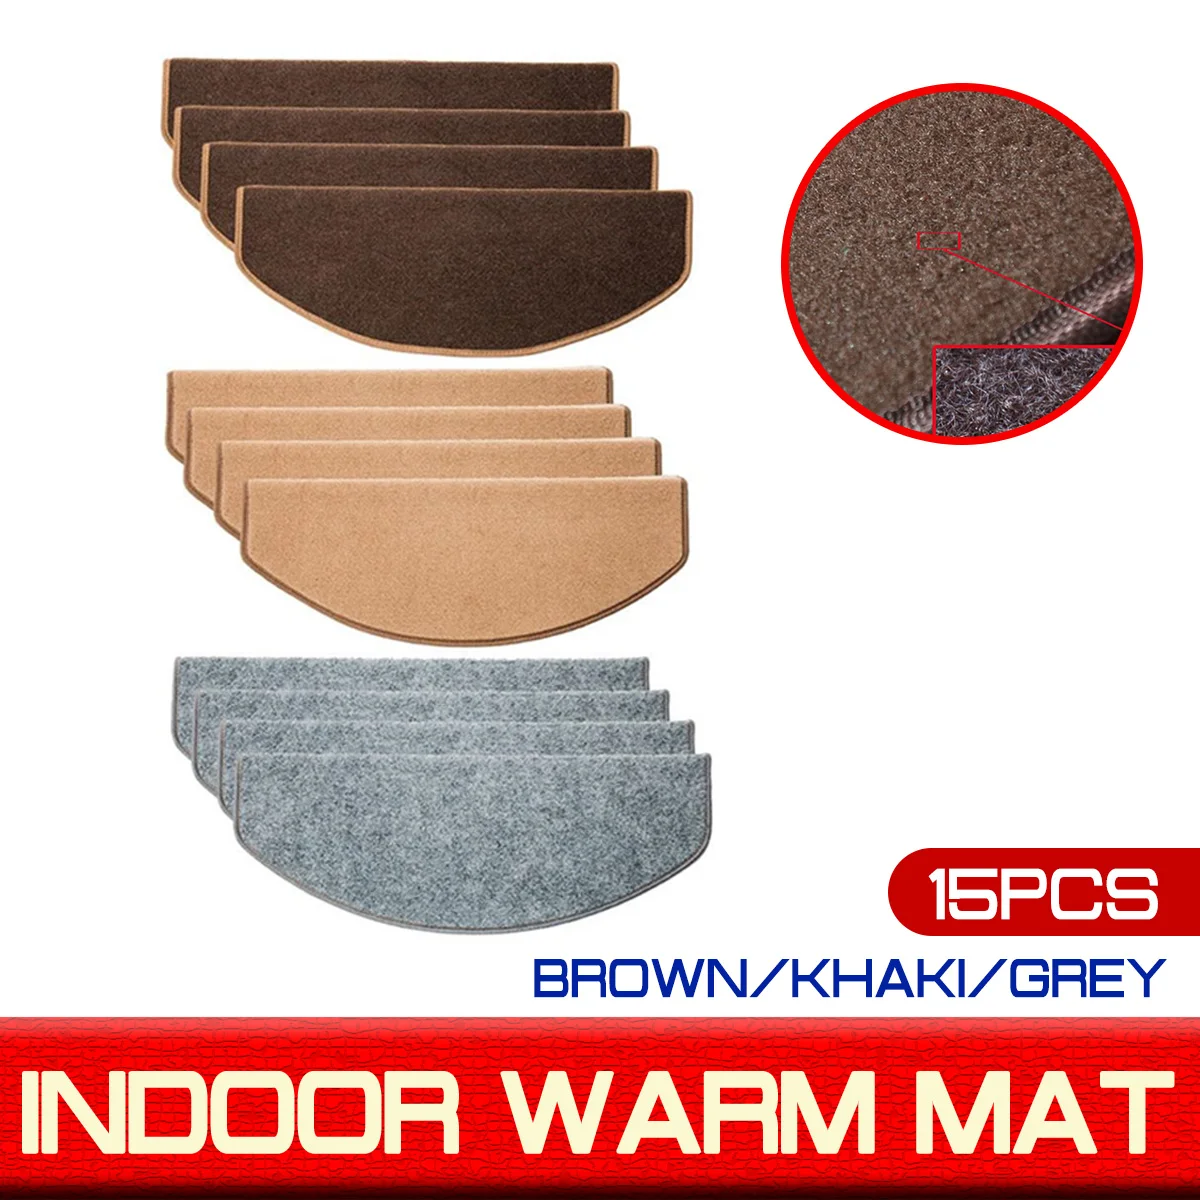 

15PCS 55x21 Stair Tread Carpet Mats Self Adhesive Stair Mat Stair Mat Anti-Skid Step Rugs Safety Mute Floor Mats Indoor Warm Pad